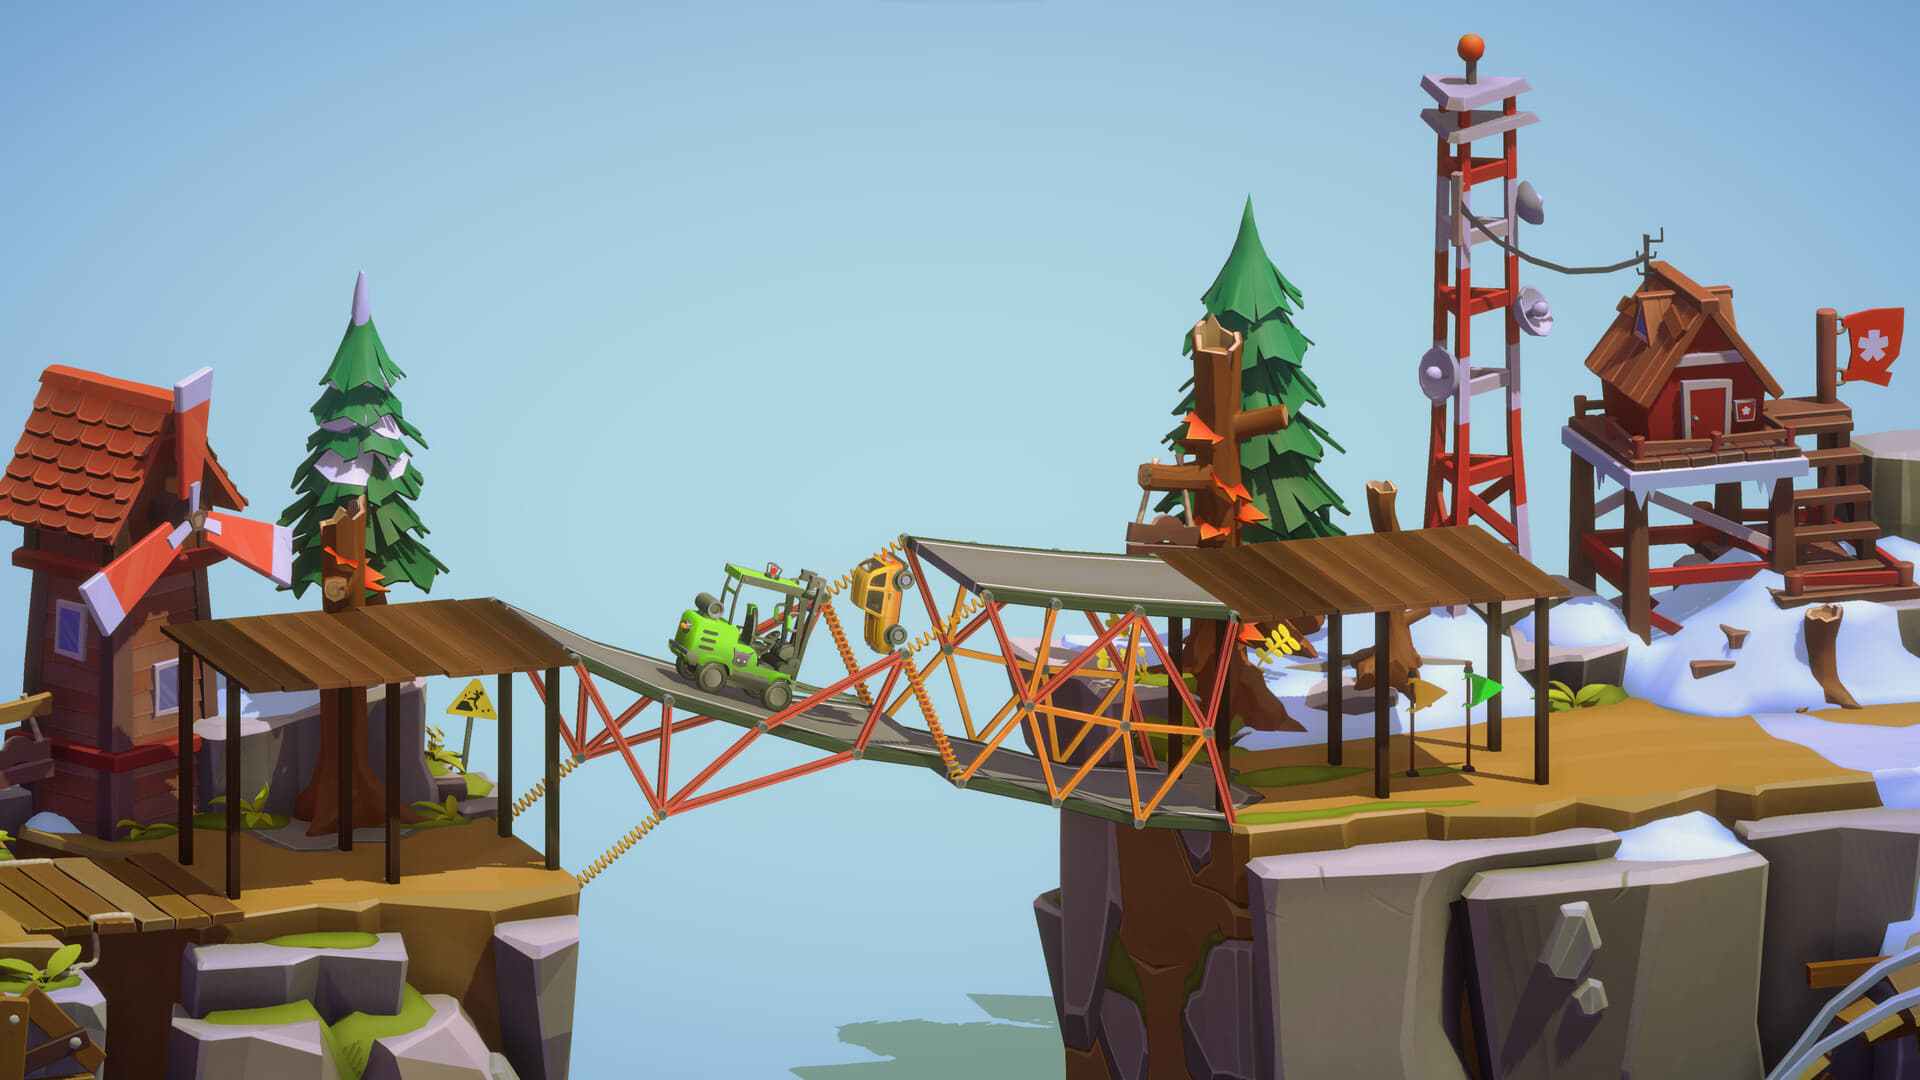 『Poly Bridge』シリーズをかなりお得に買えるセールが開催。人気の橋建設シミュレーションゲーム_002